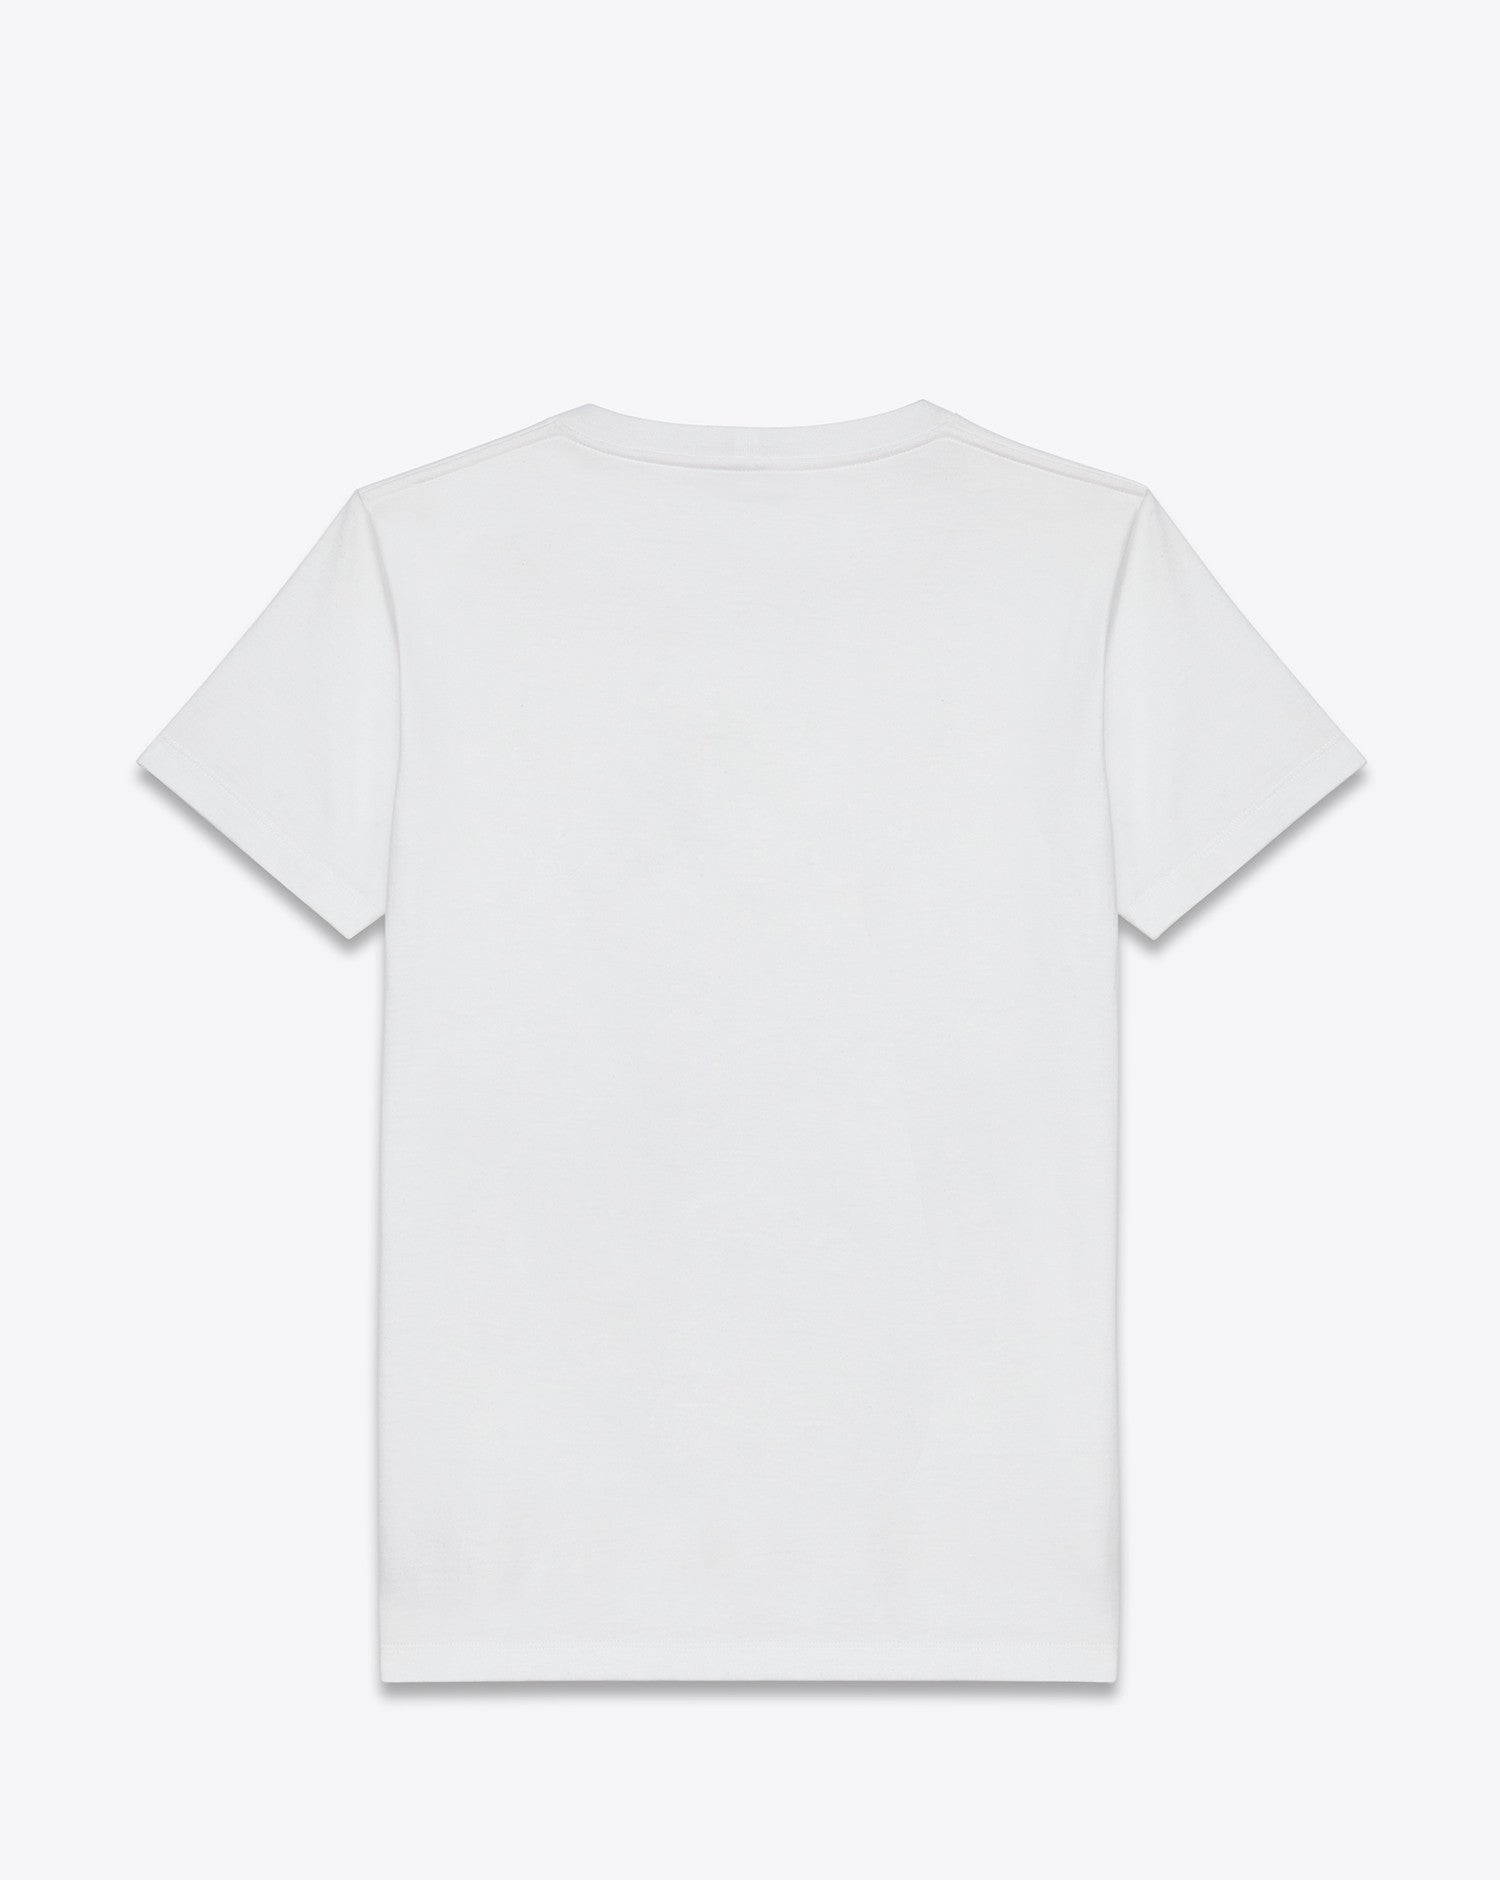 Wavy T-Shirt White - DEMEANOIR - 1